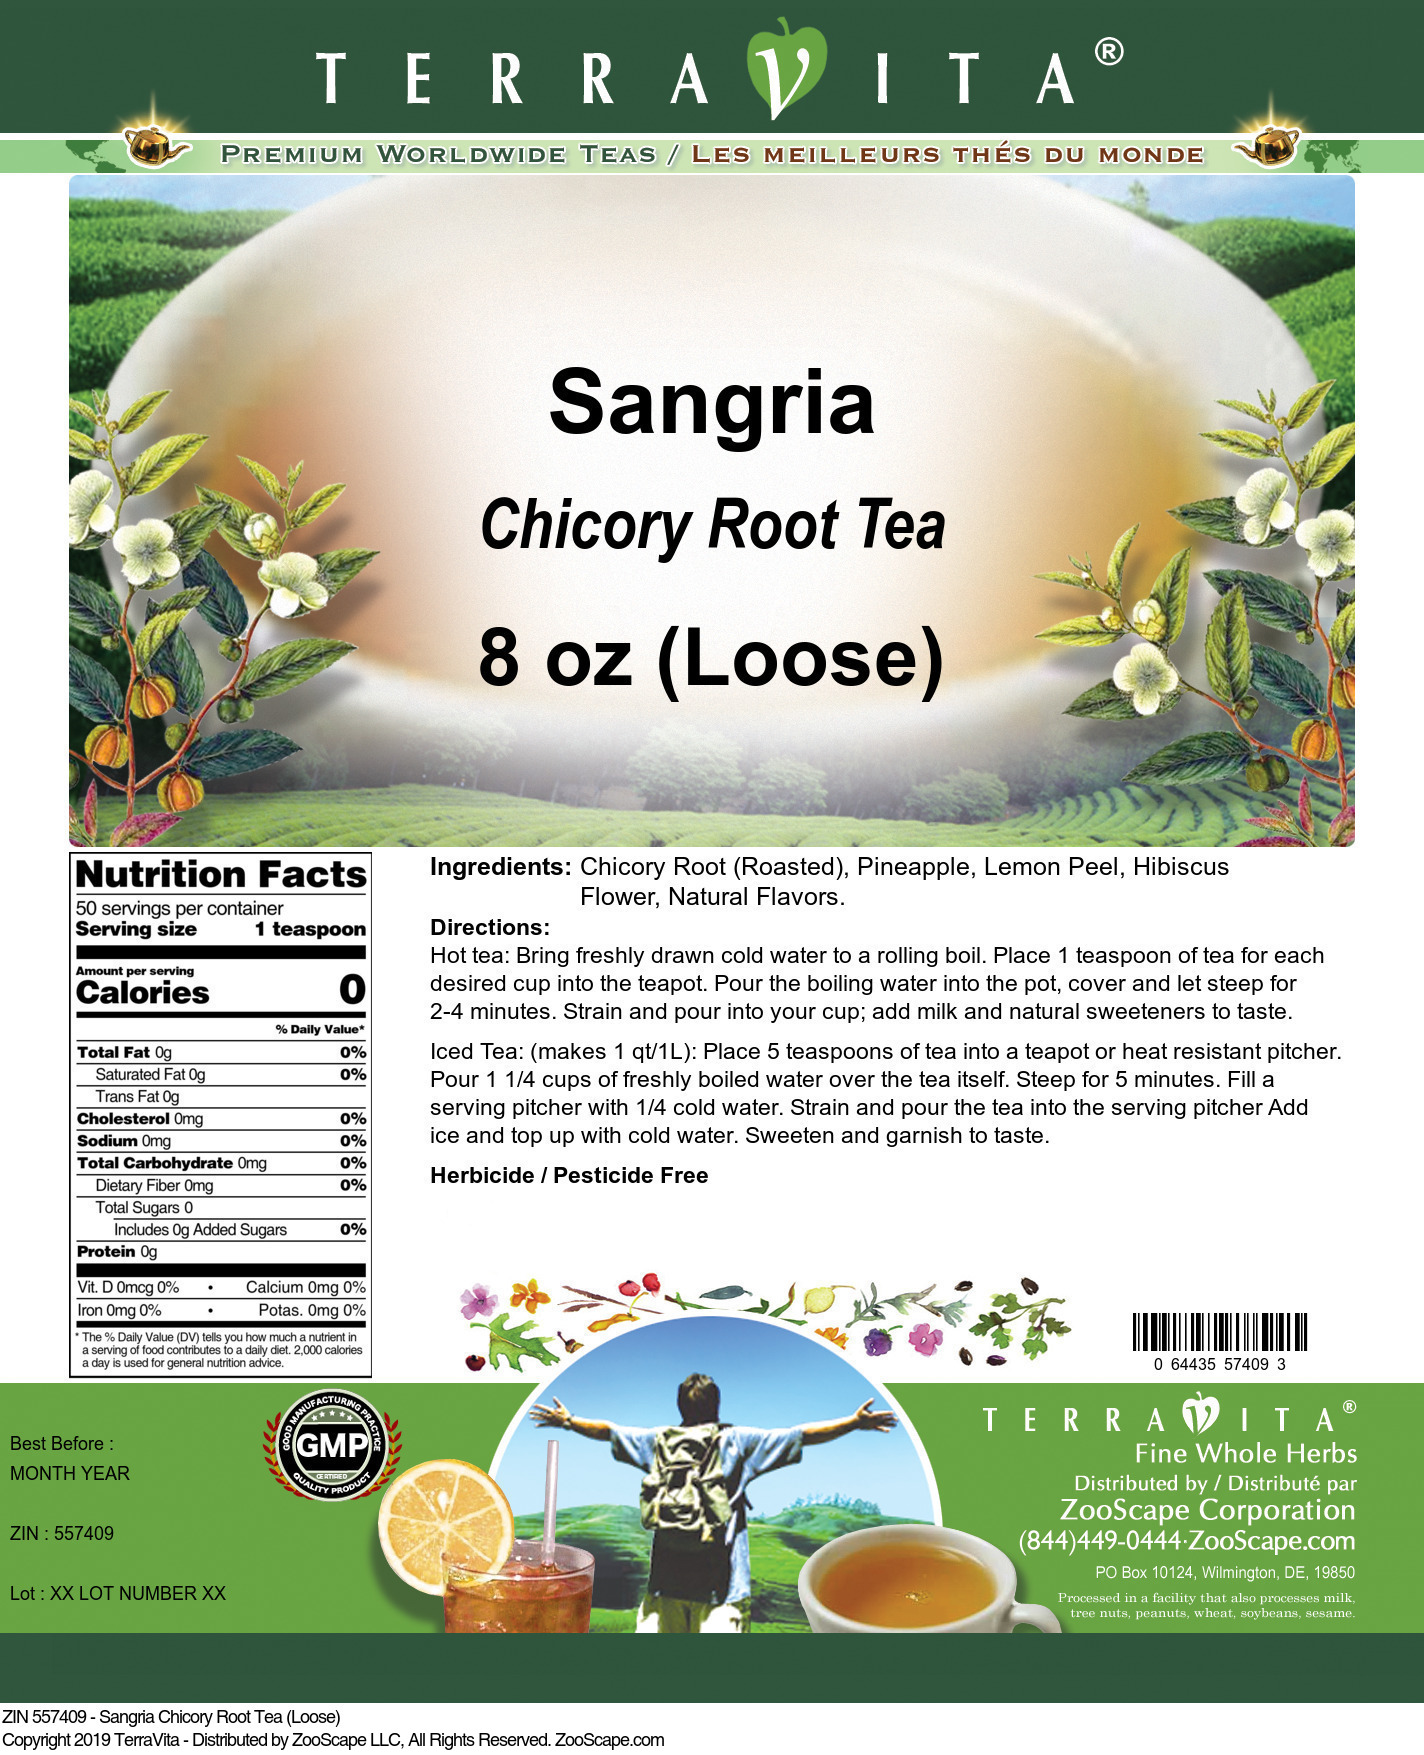 Sangria Chicory Root Tea (Loose) - Label